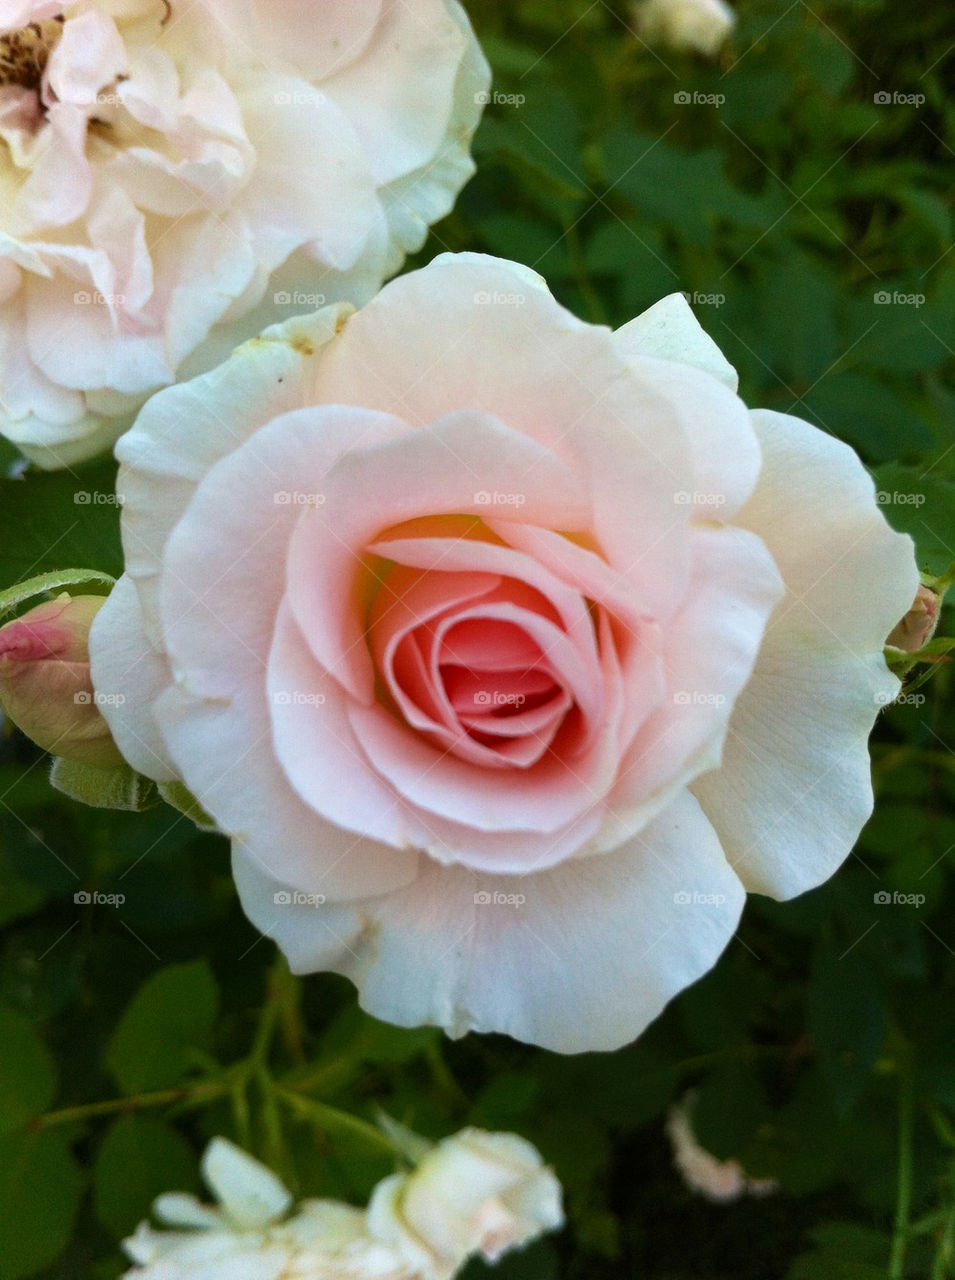 garden nature pink rose by hmsaibhlin